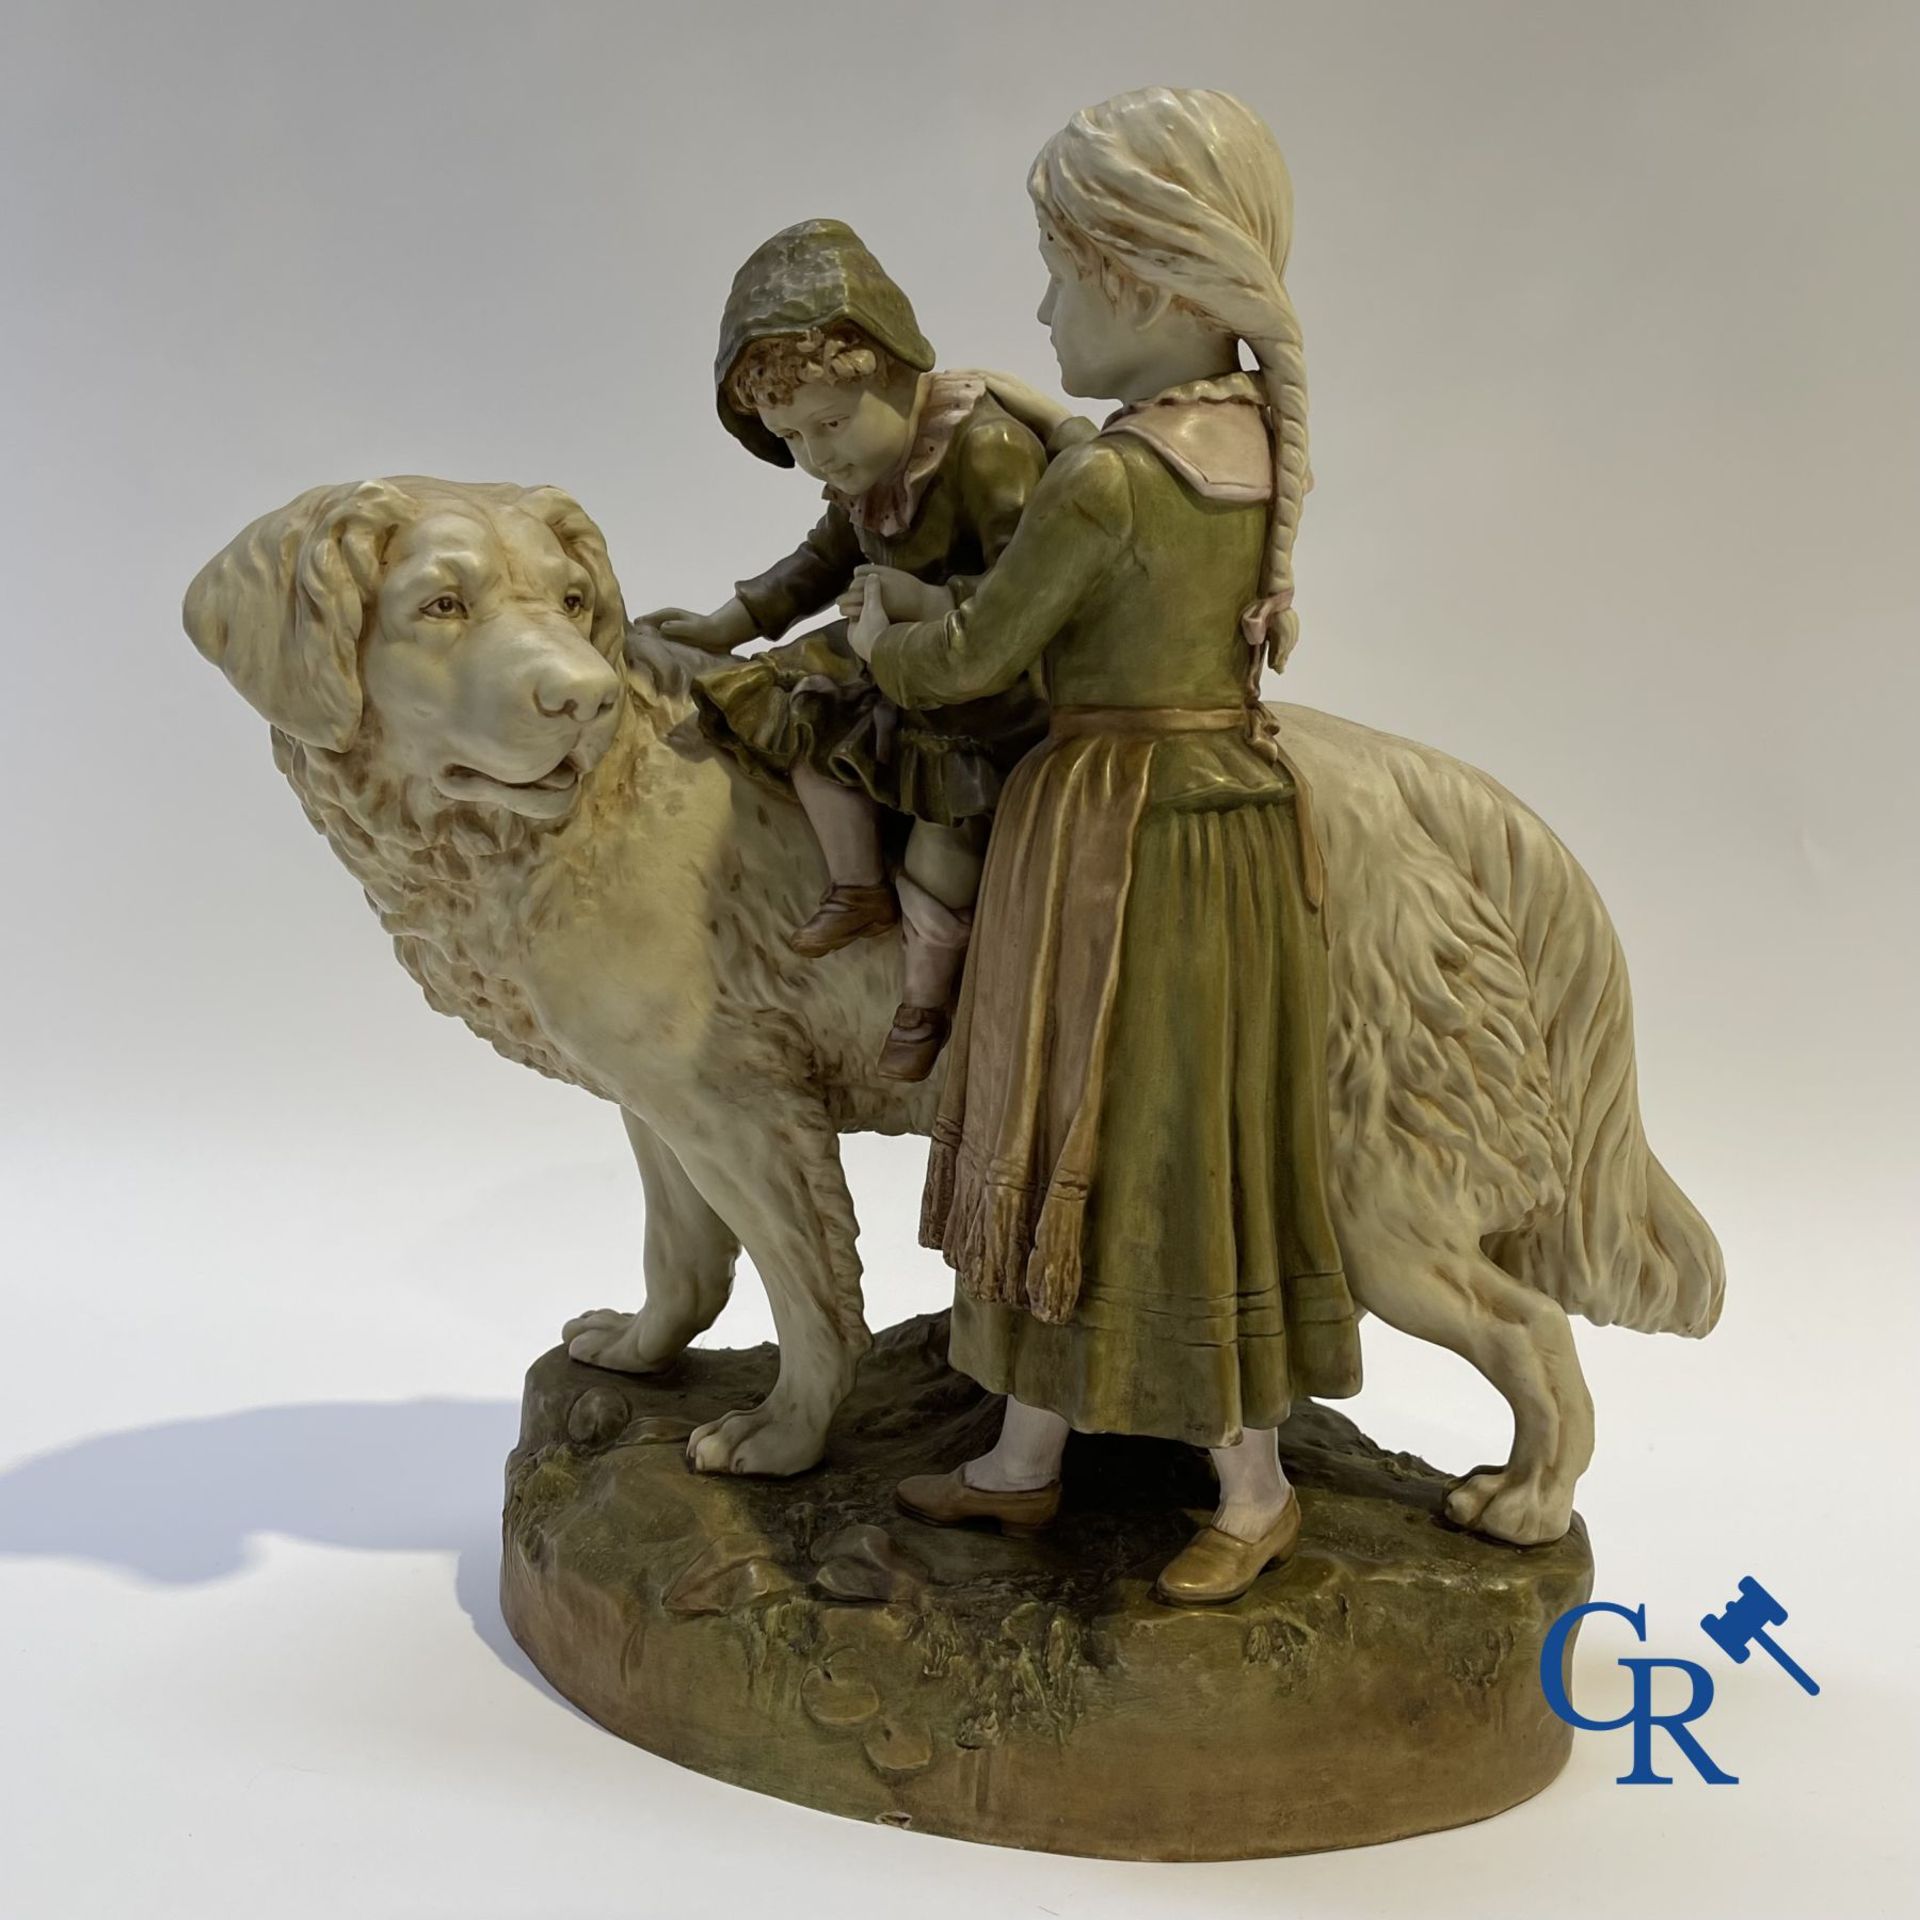 Porcelain: Royal Dux. A polychrome representation of a Saint Bernard dog with children. - Image 3 of 10